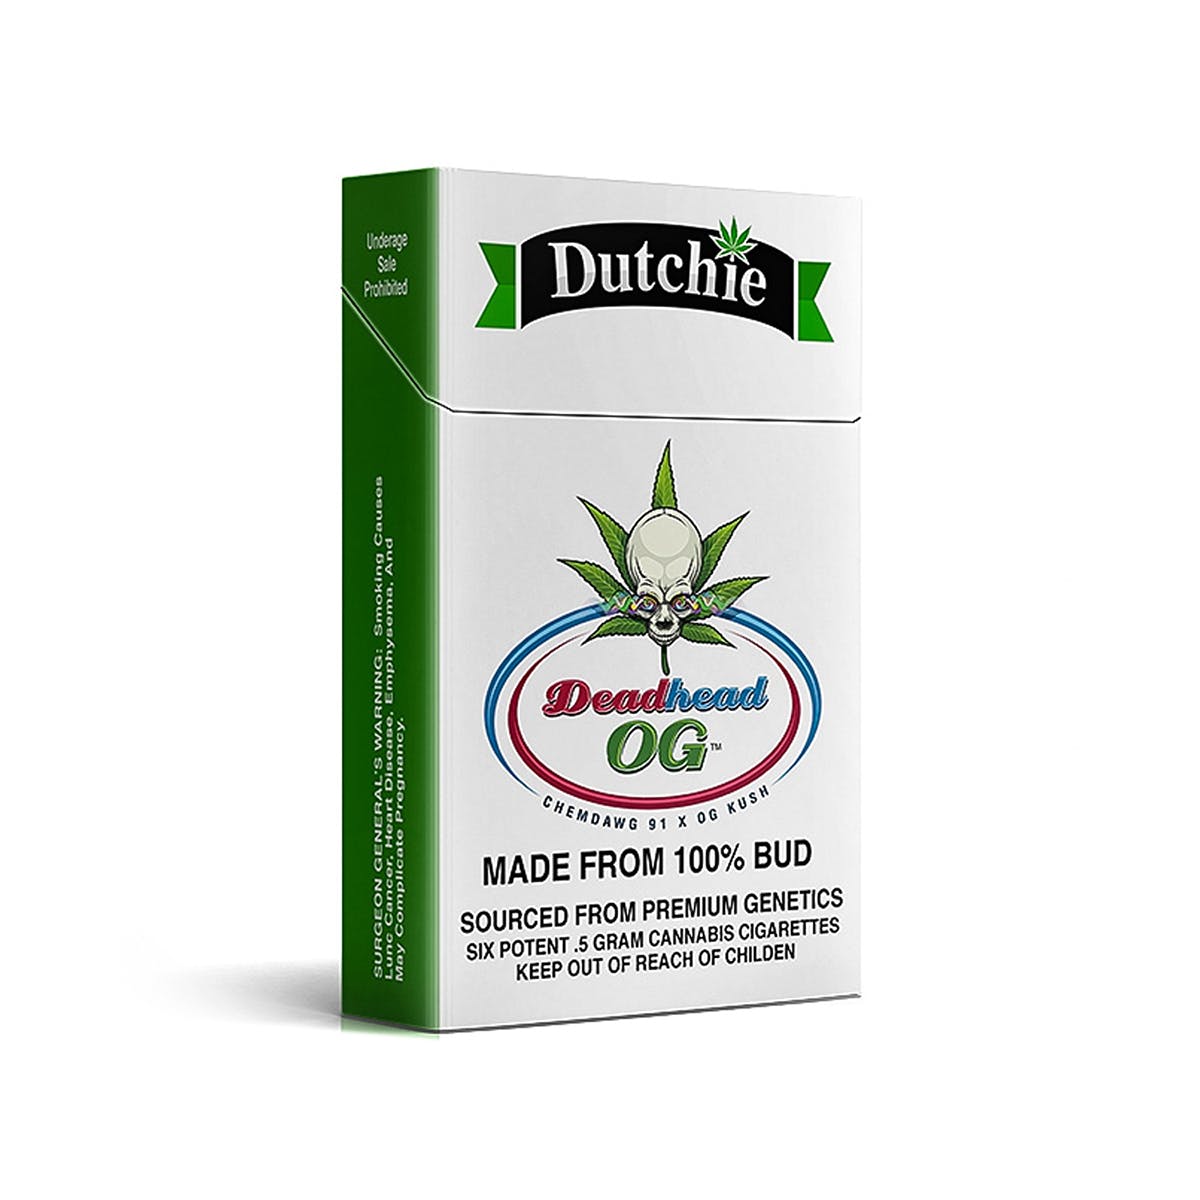 marijuana-dispensaries-yilo-superstore-in-phoenix-deadhead-og-dutchie